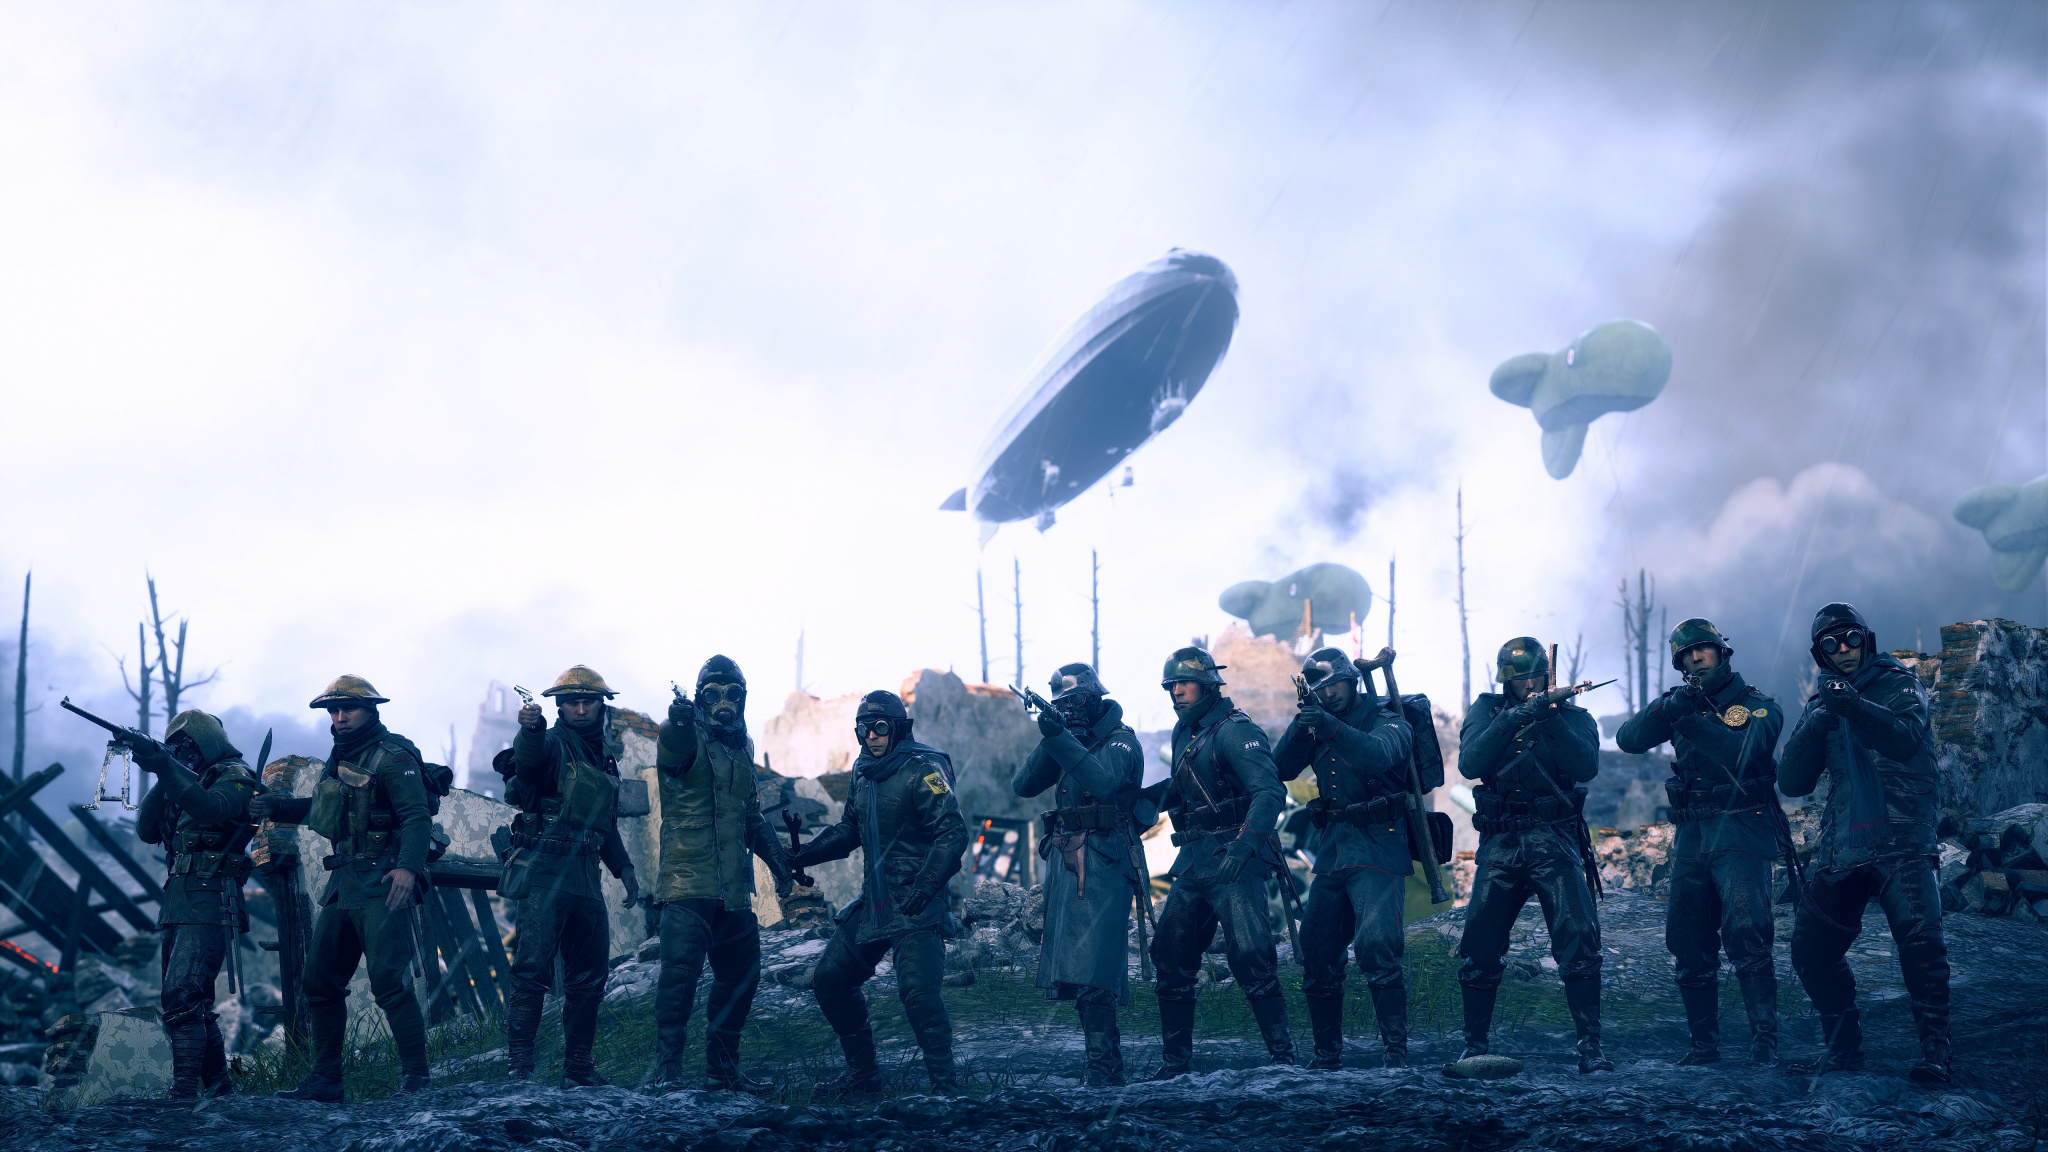 Battlefield 1, Video Game, Soldiers, Wallpaper - Battlefield 1 Wallpaper Zeppelin - HD Wallpaper 